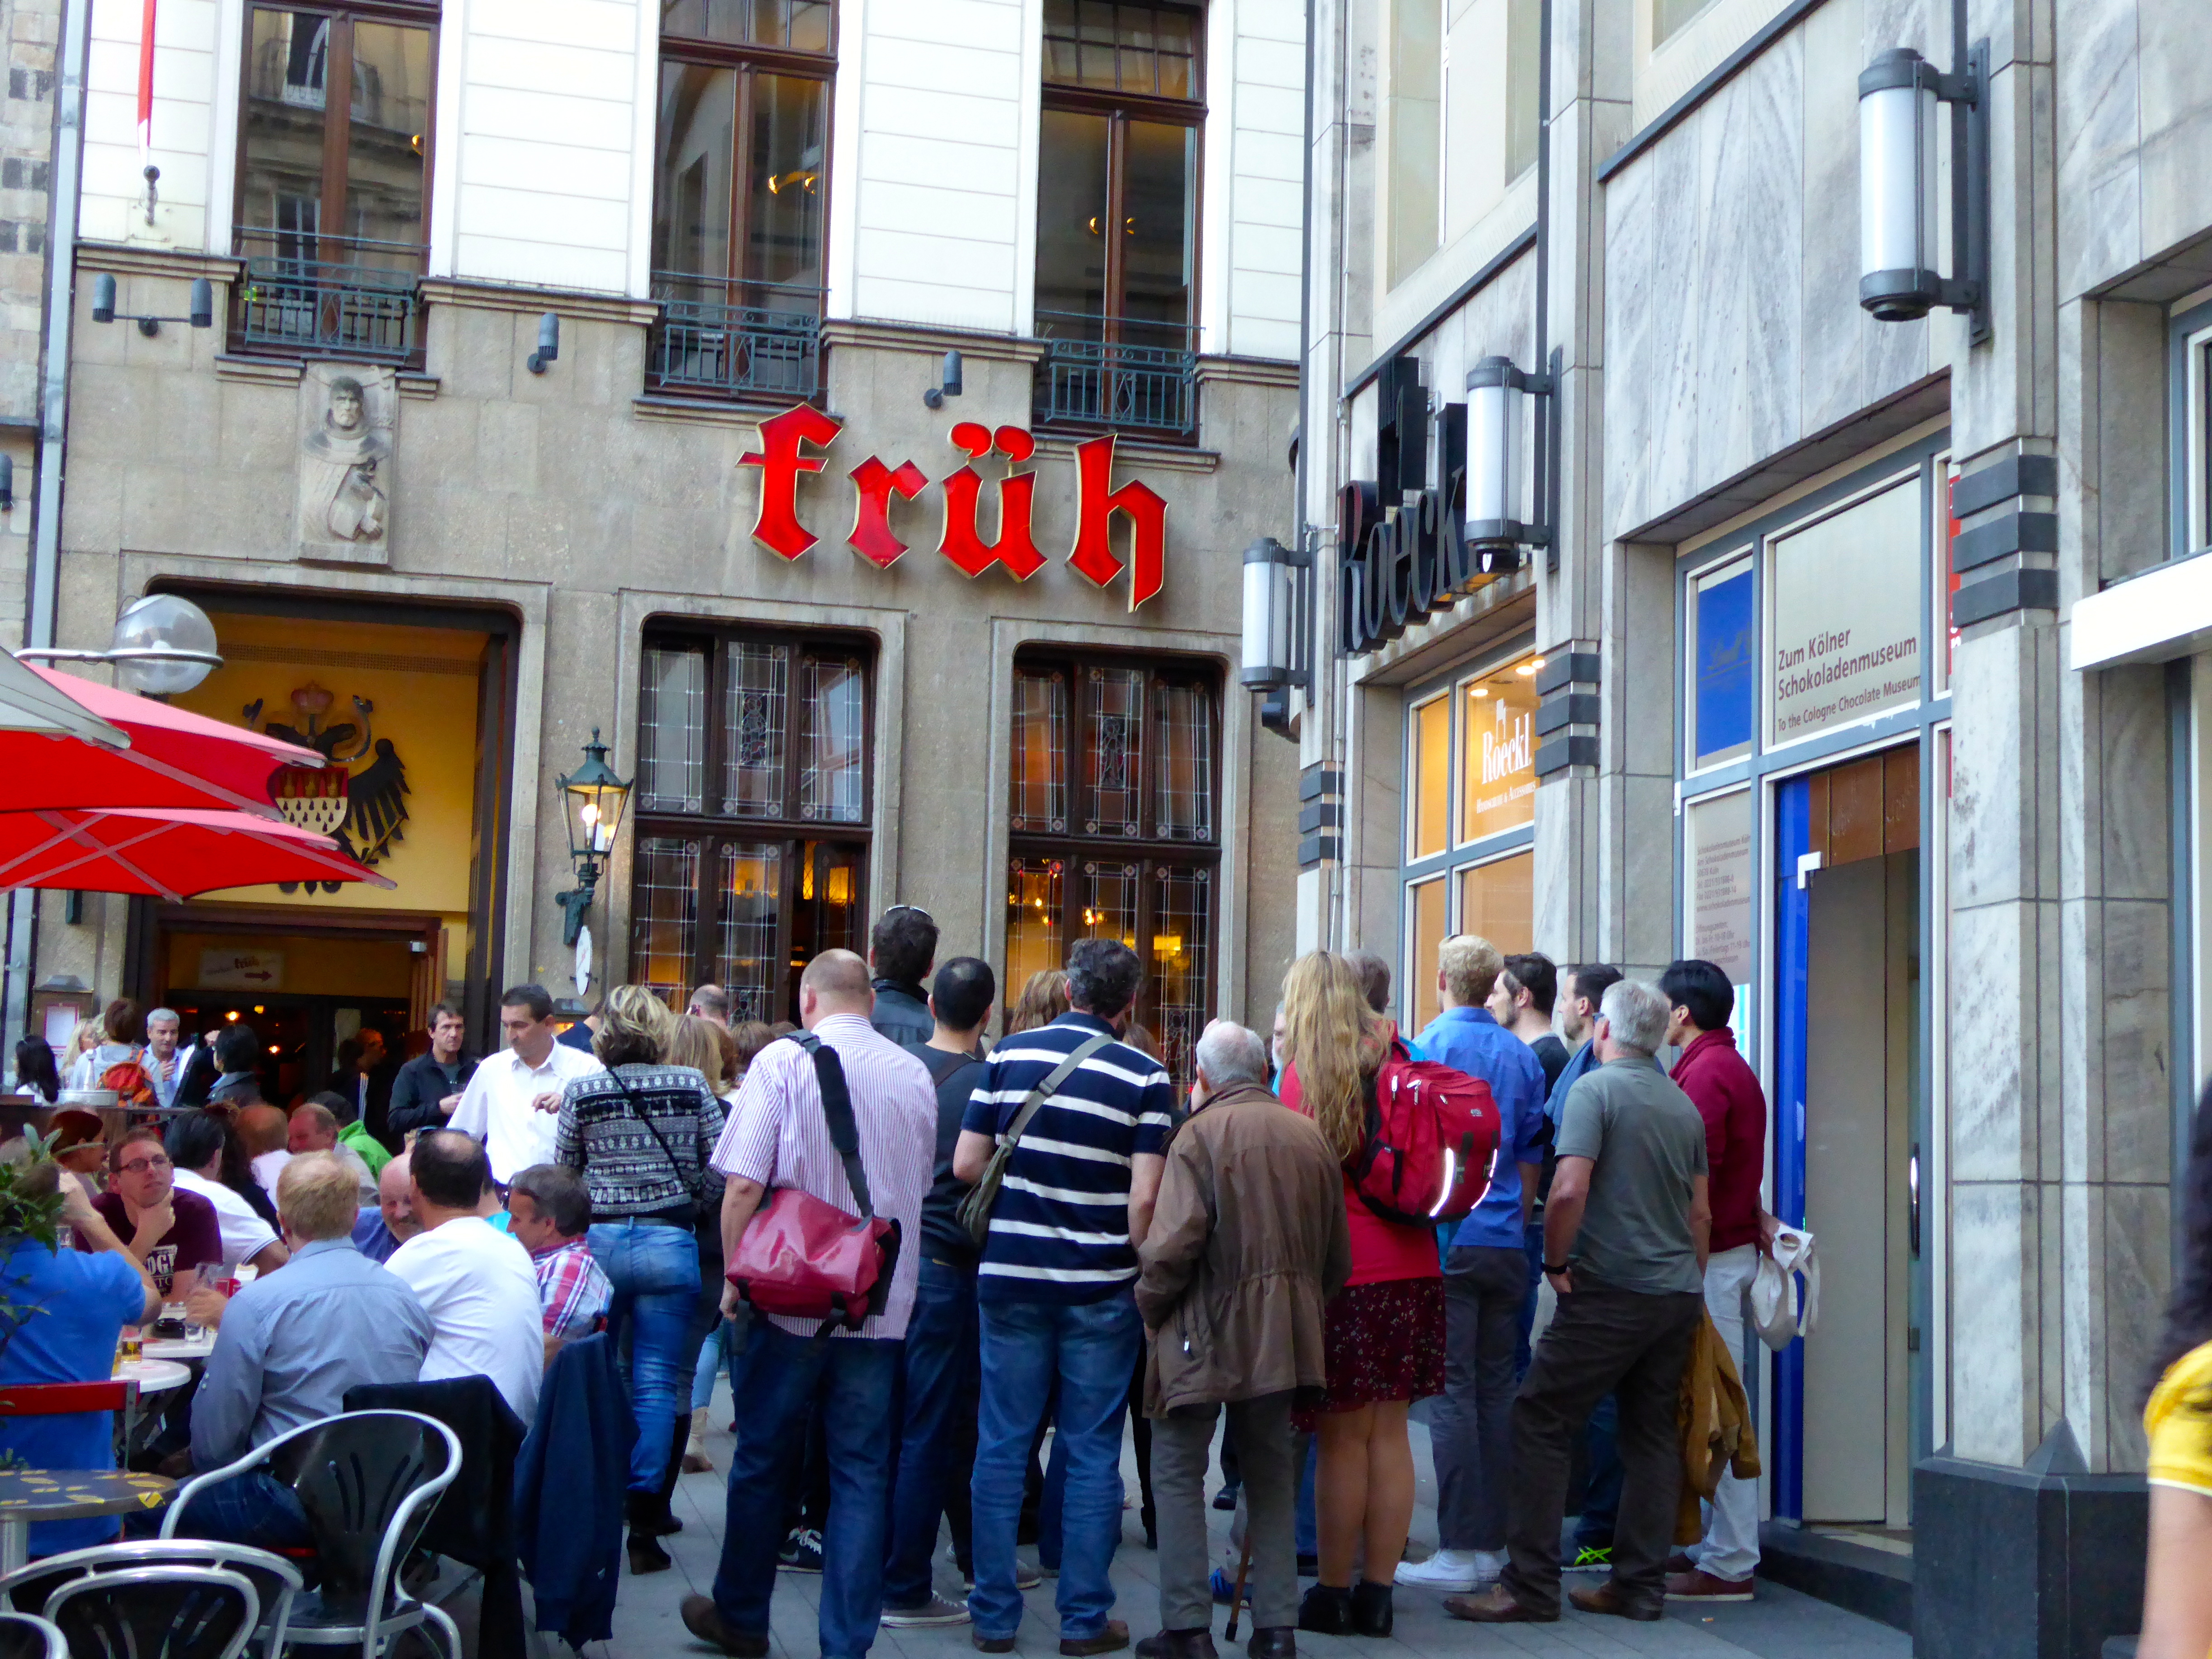 Früh - a Köln pub that brews its own beer